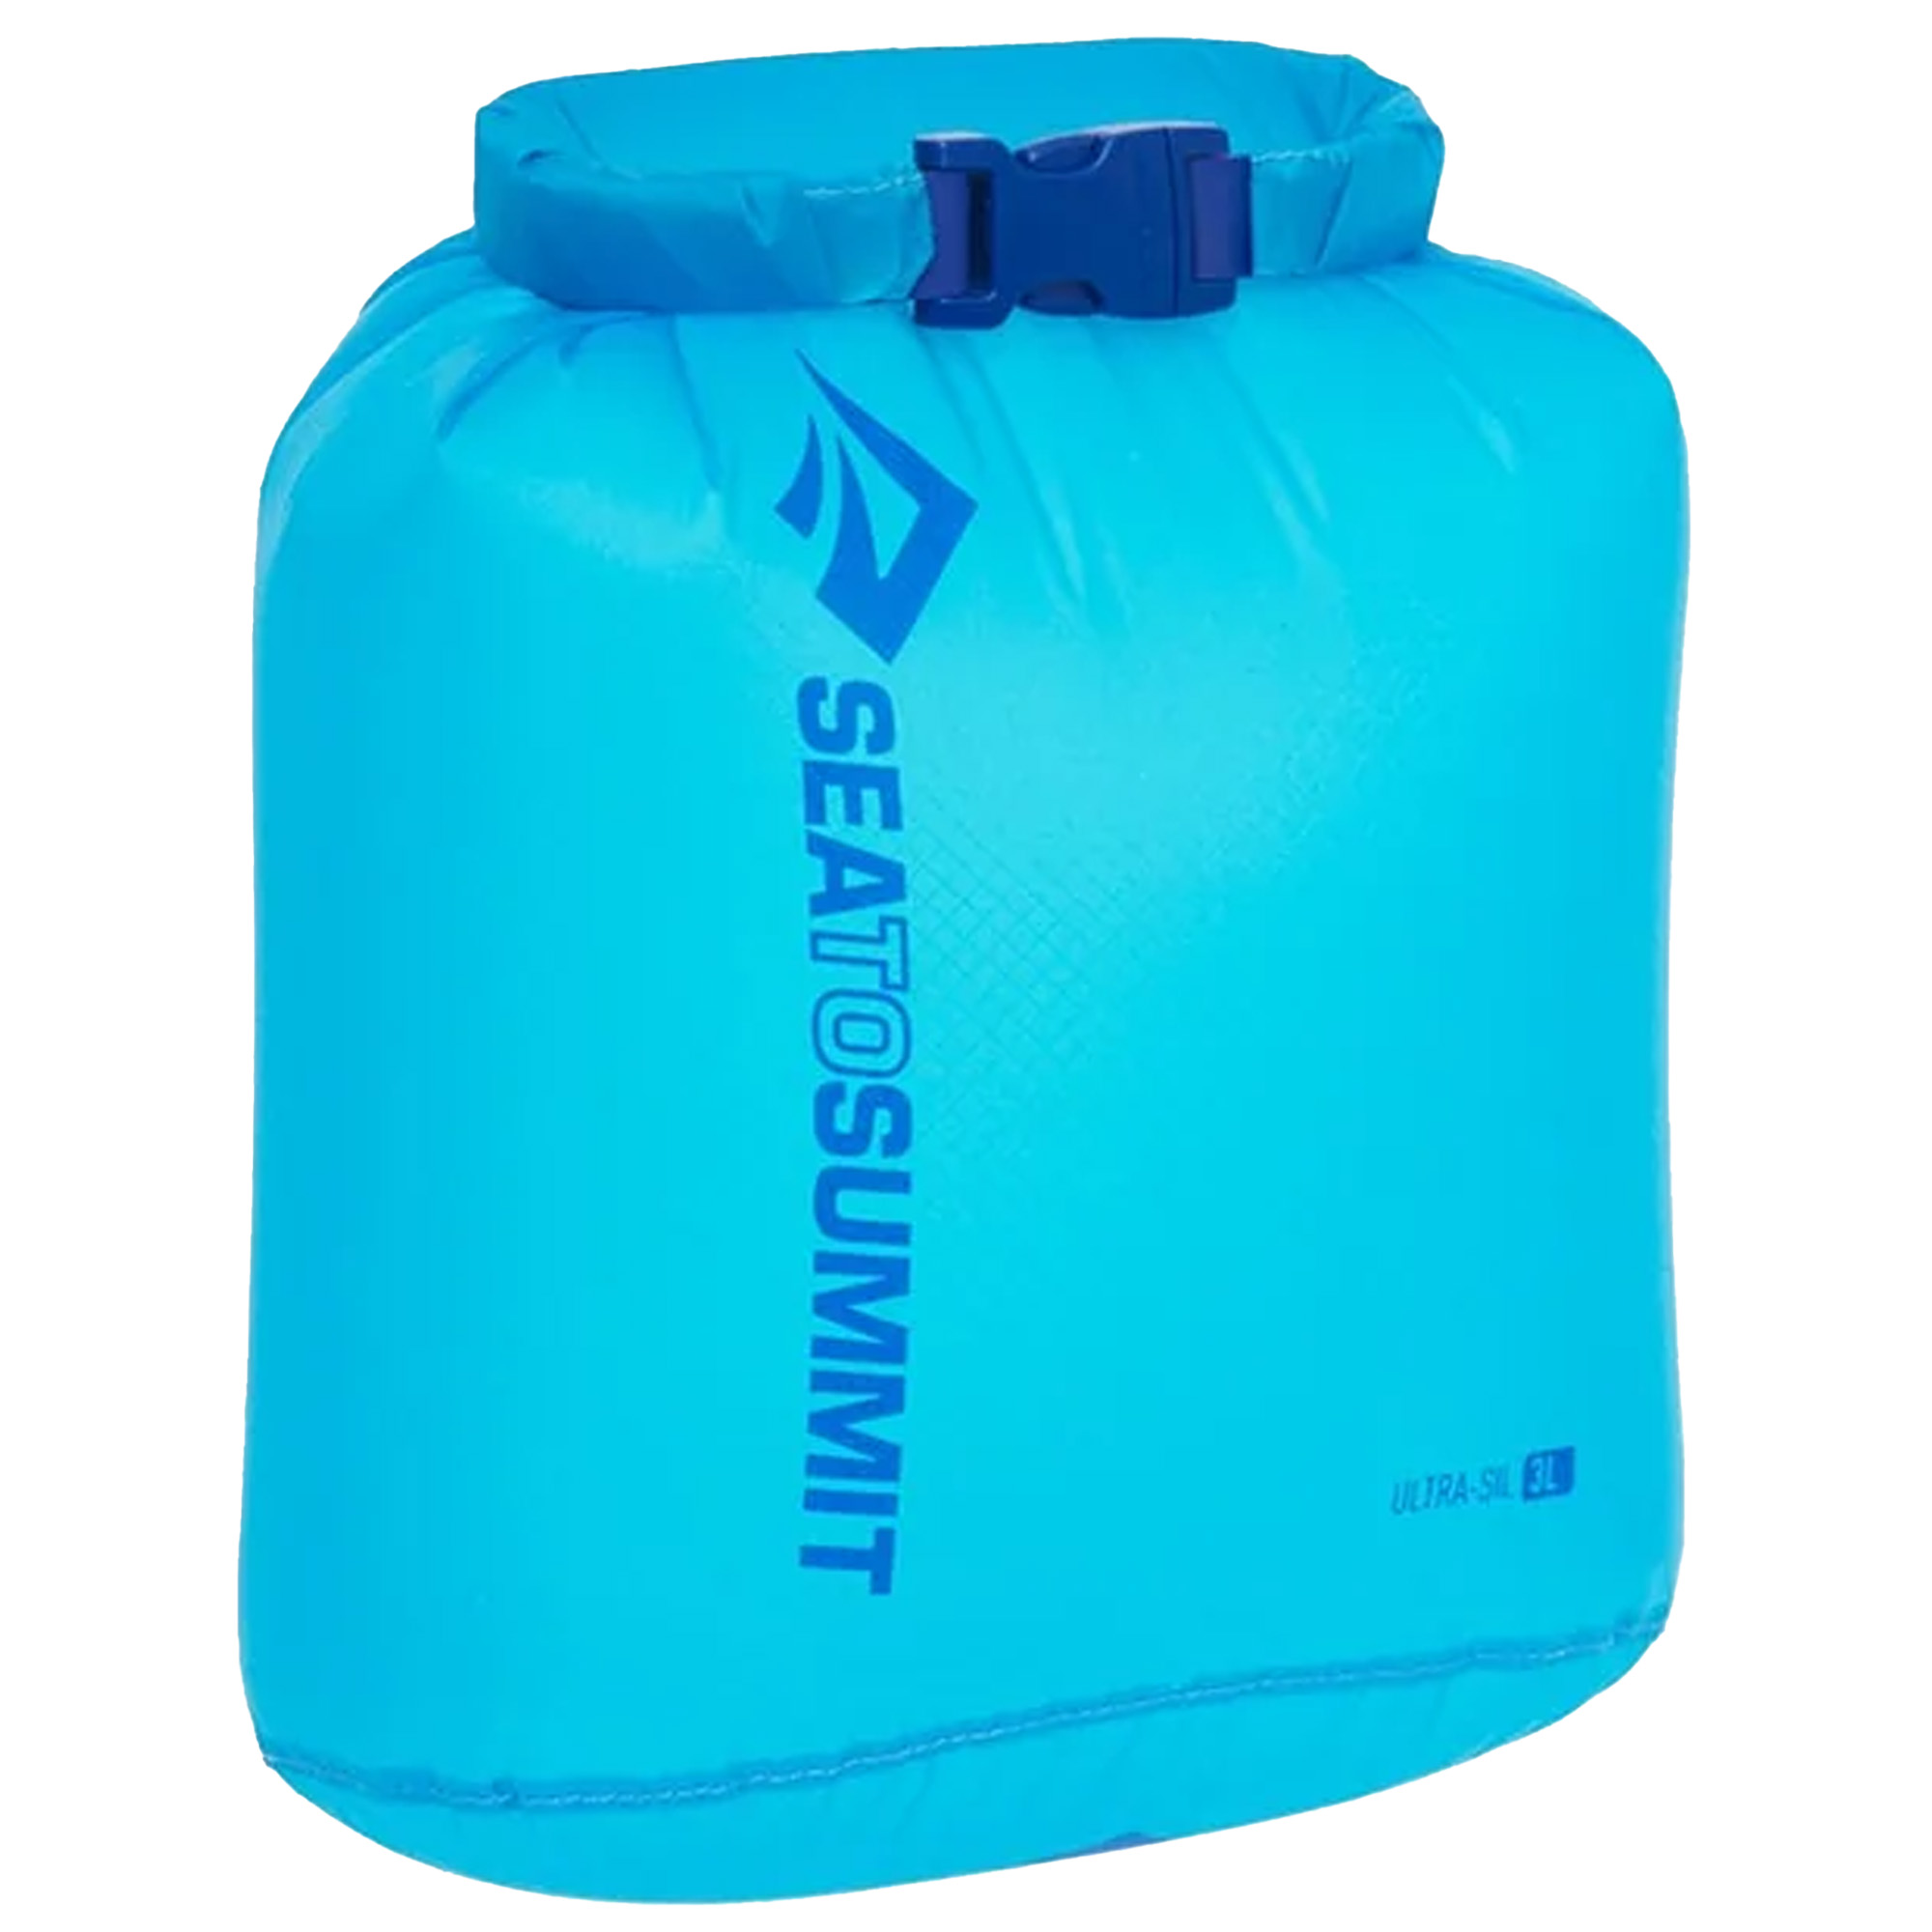 Sea to Summit Ultra-Sil Dry Bag 3L Waterproof Gear Sack